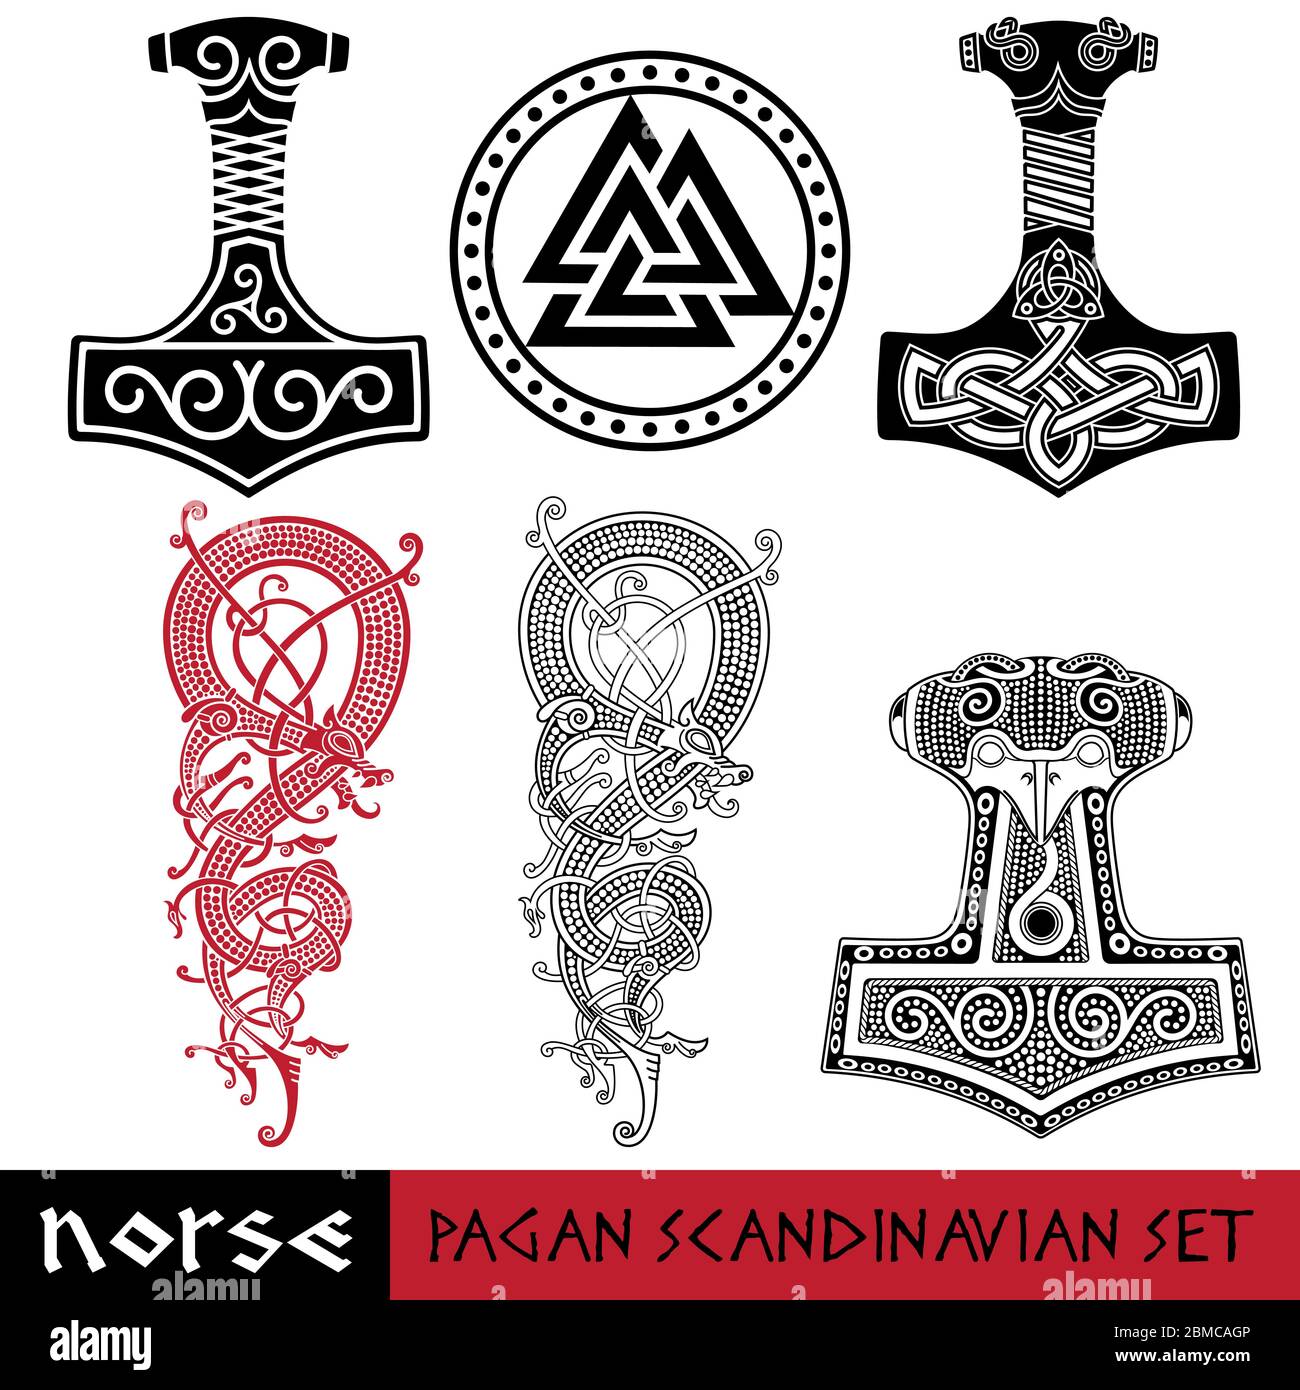 Scandinavian pagan set - Thors hammer - Mjollnir, Odin sign - Valknut and world dragon Jormundgand. Illustration of Norse mythology Stock Vector